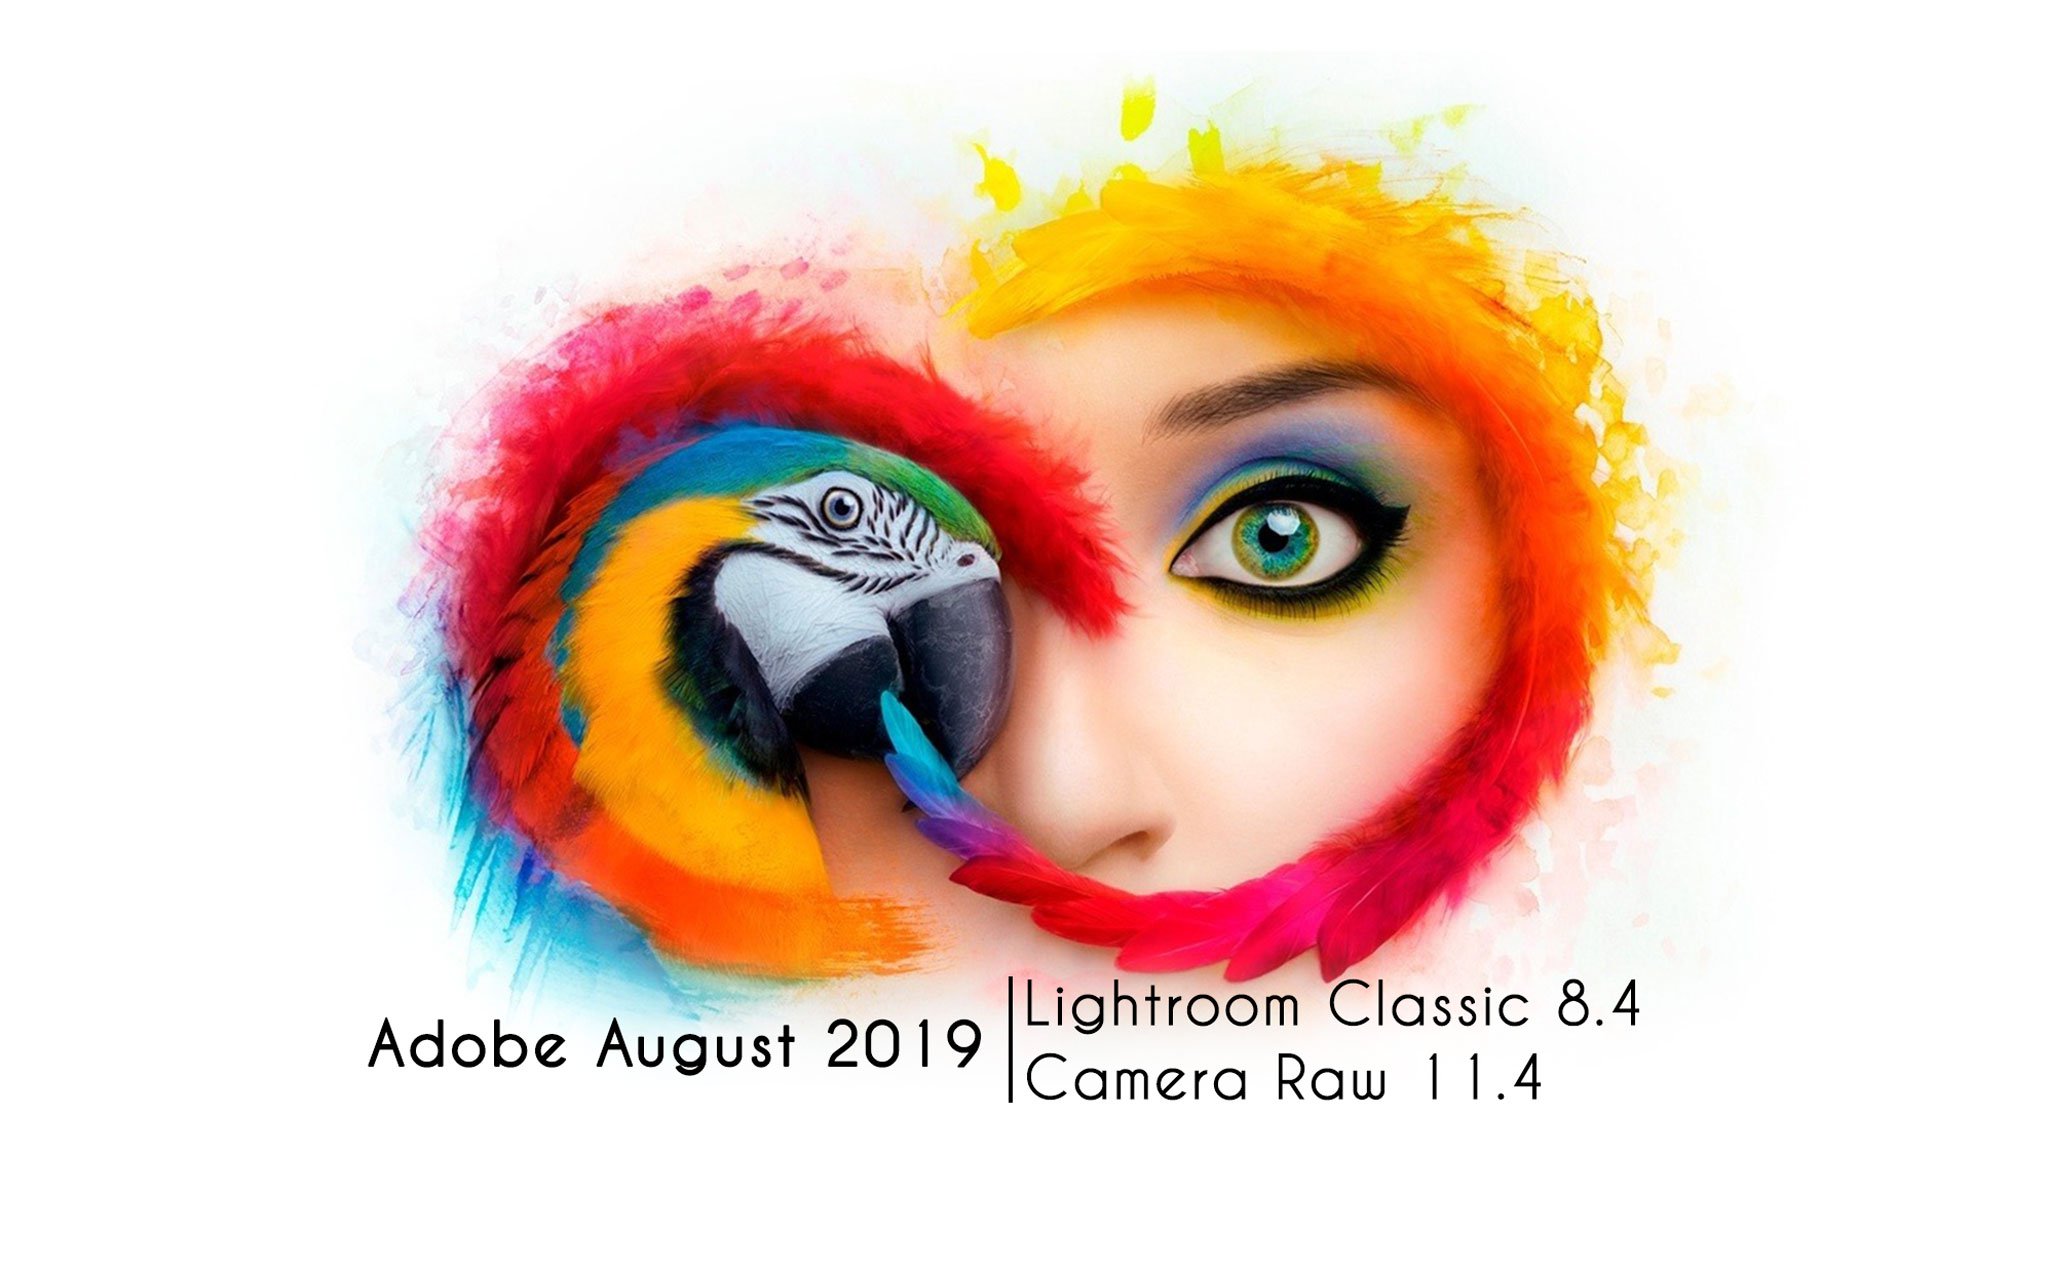 Adobe_August_2019_ban_update_moi_cho_Lightroom_Classic_va_Camera_Raw__ho_tro_GPU__them_workflow_moi